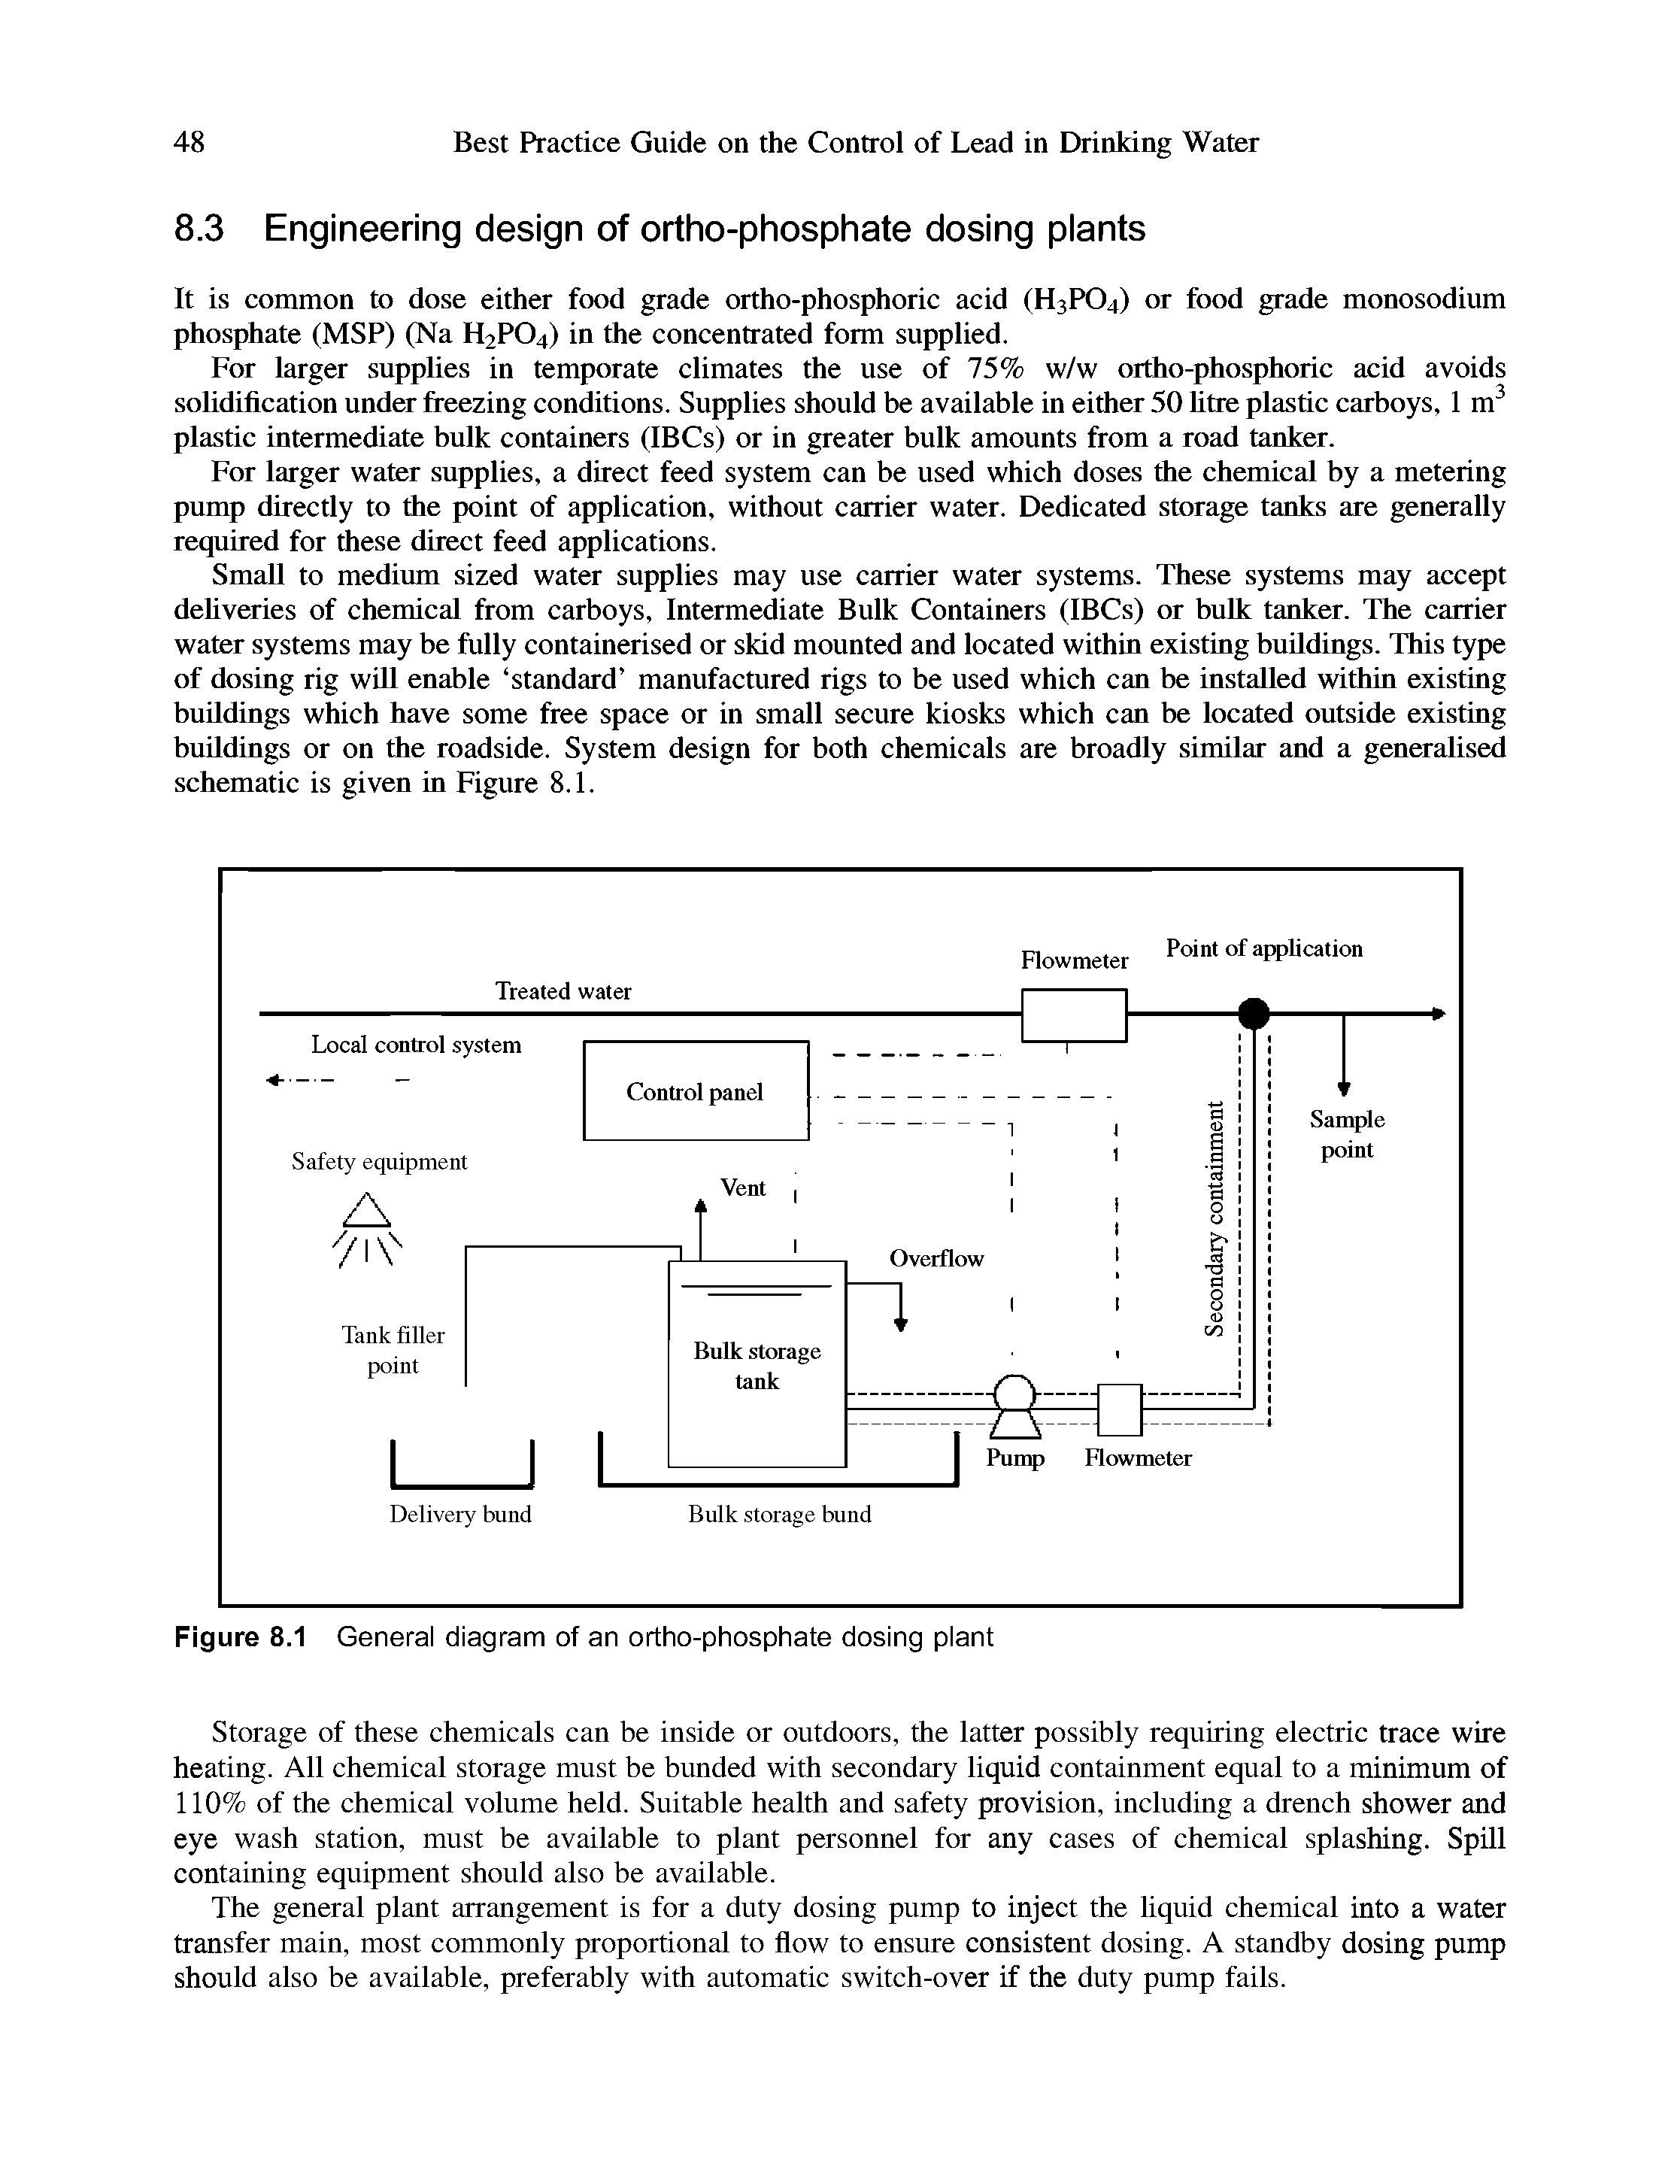 Figure 8.1 General diagram of an ortho-phosphate dosing plant...